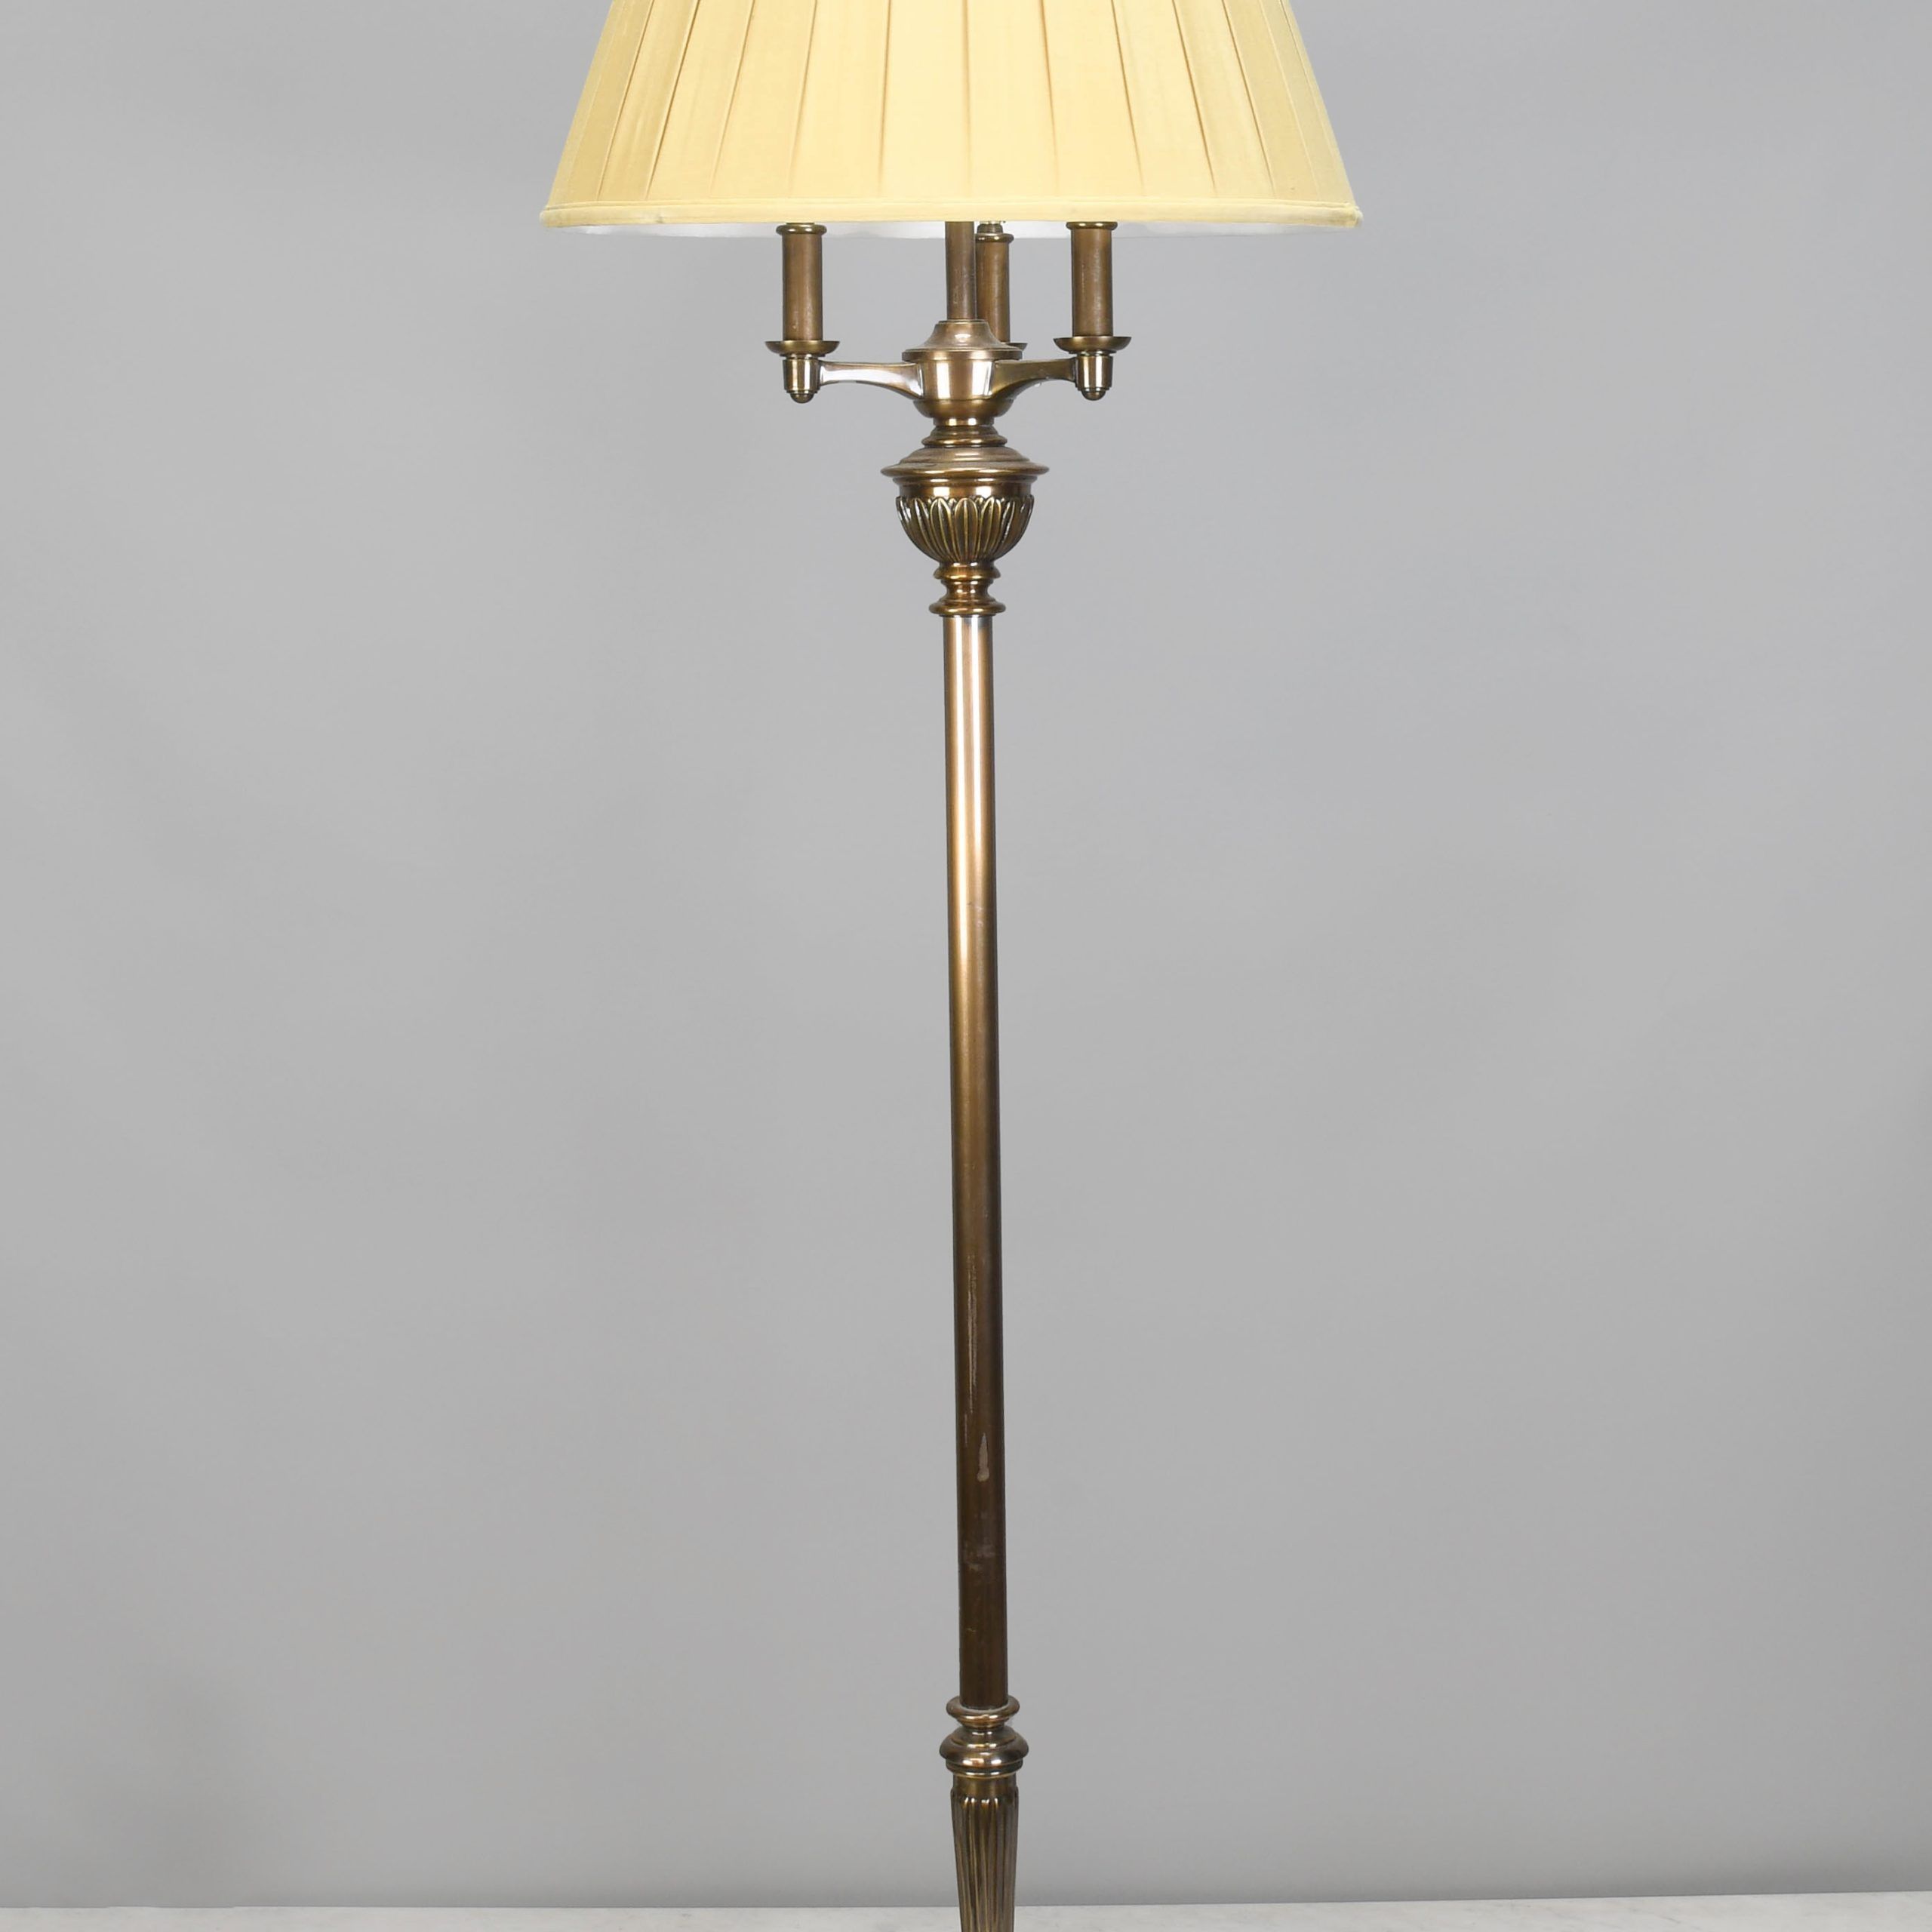 Three Candle Antique Brass Floor Lamp | Floor Lamps | Collection | City  Knickerbocker | Lighting Rentals Intended For Antique Brass Floor Lamps (View 9 of 15)